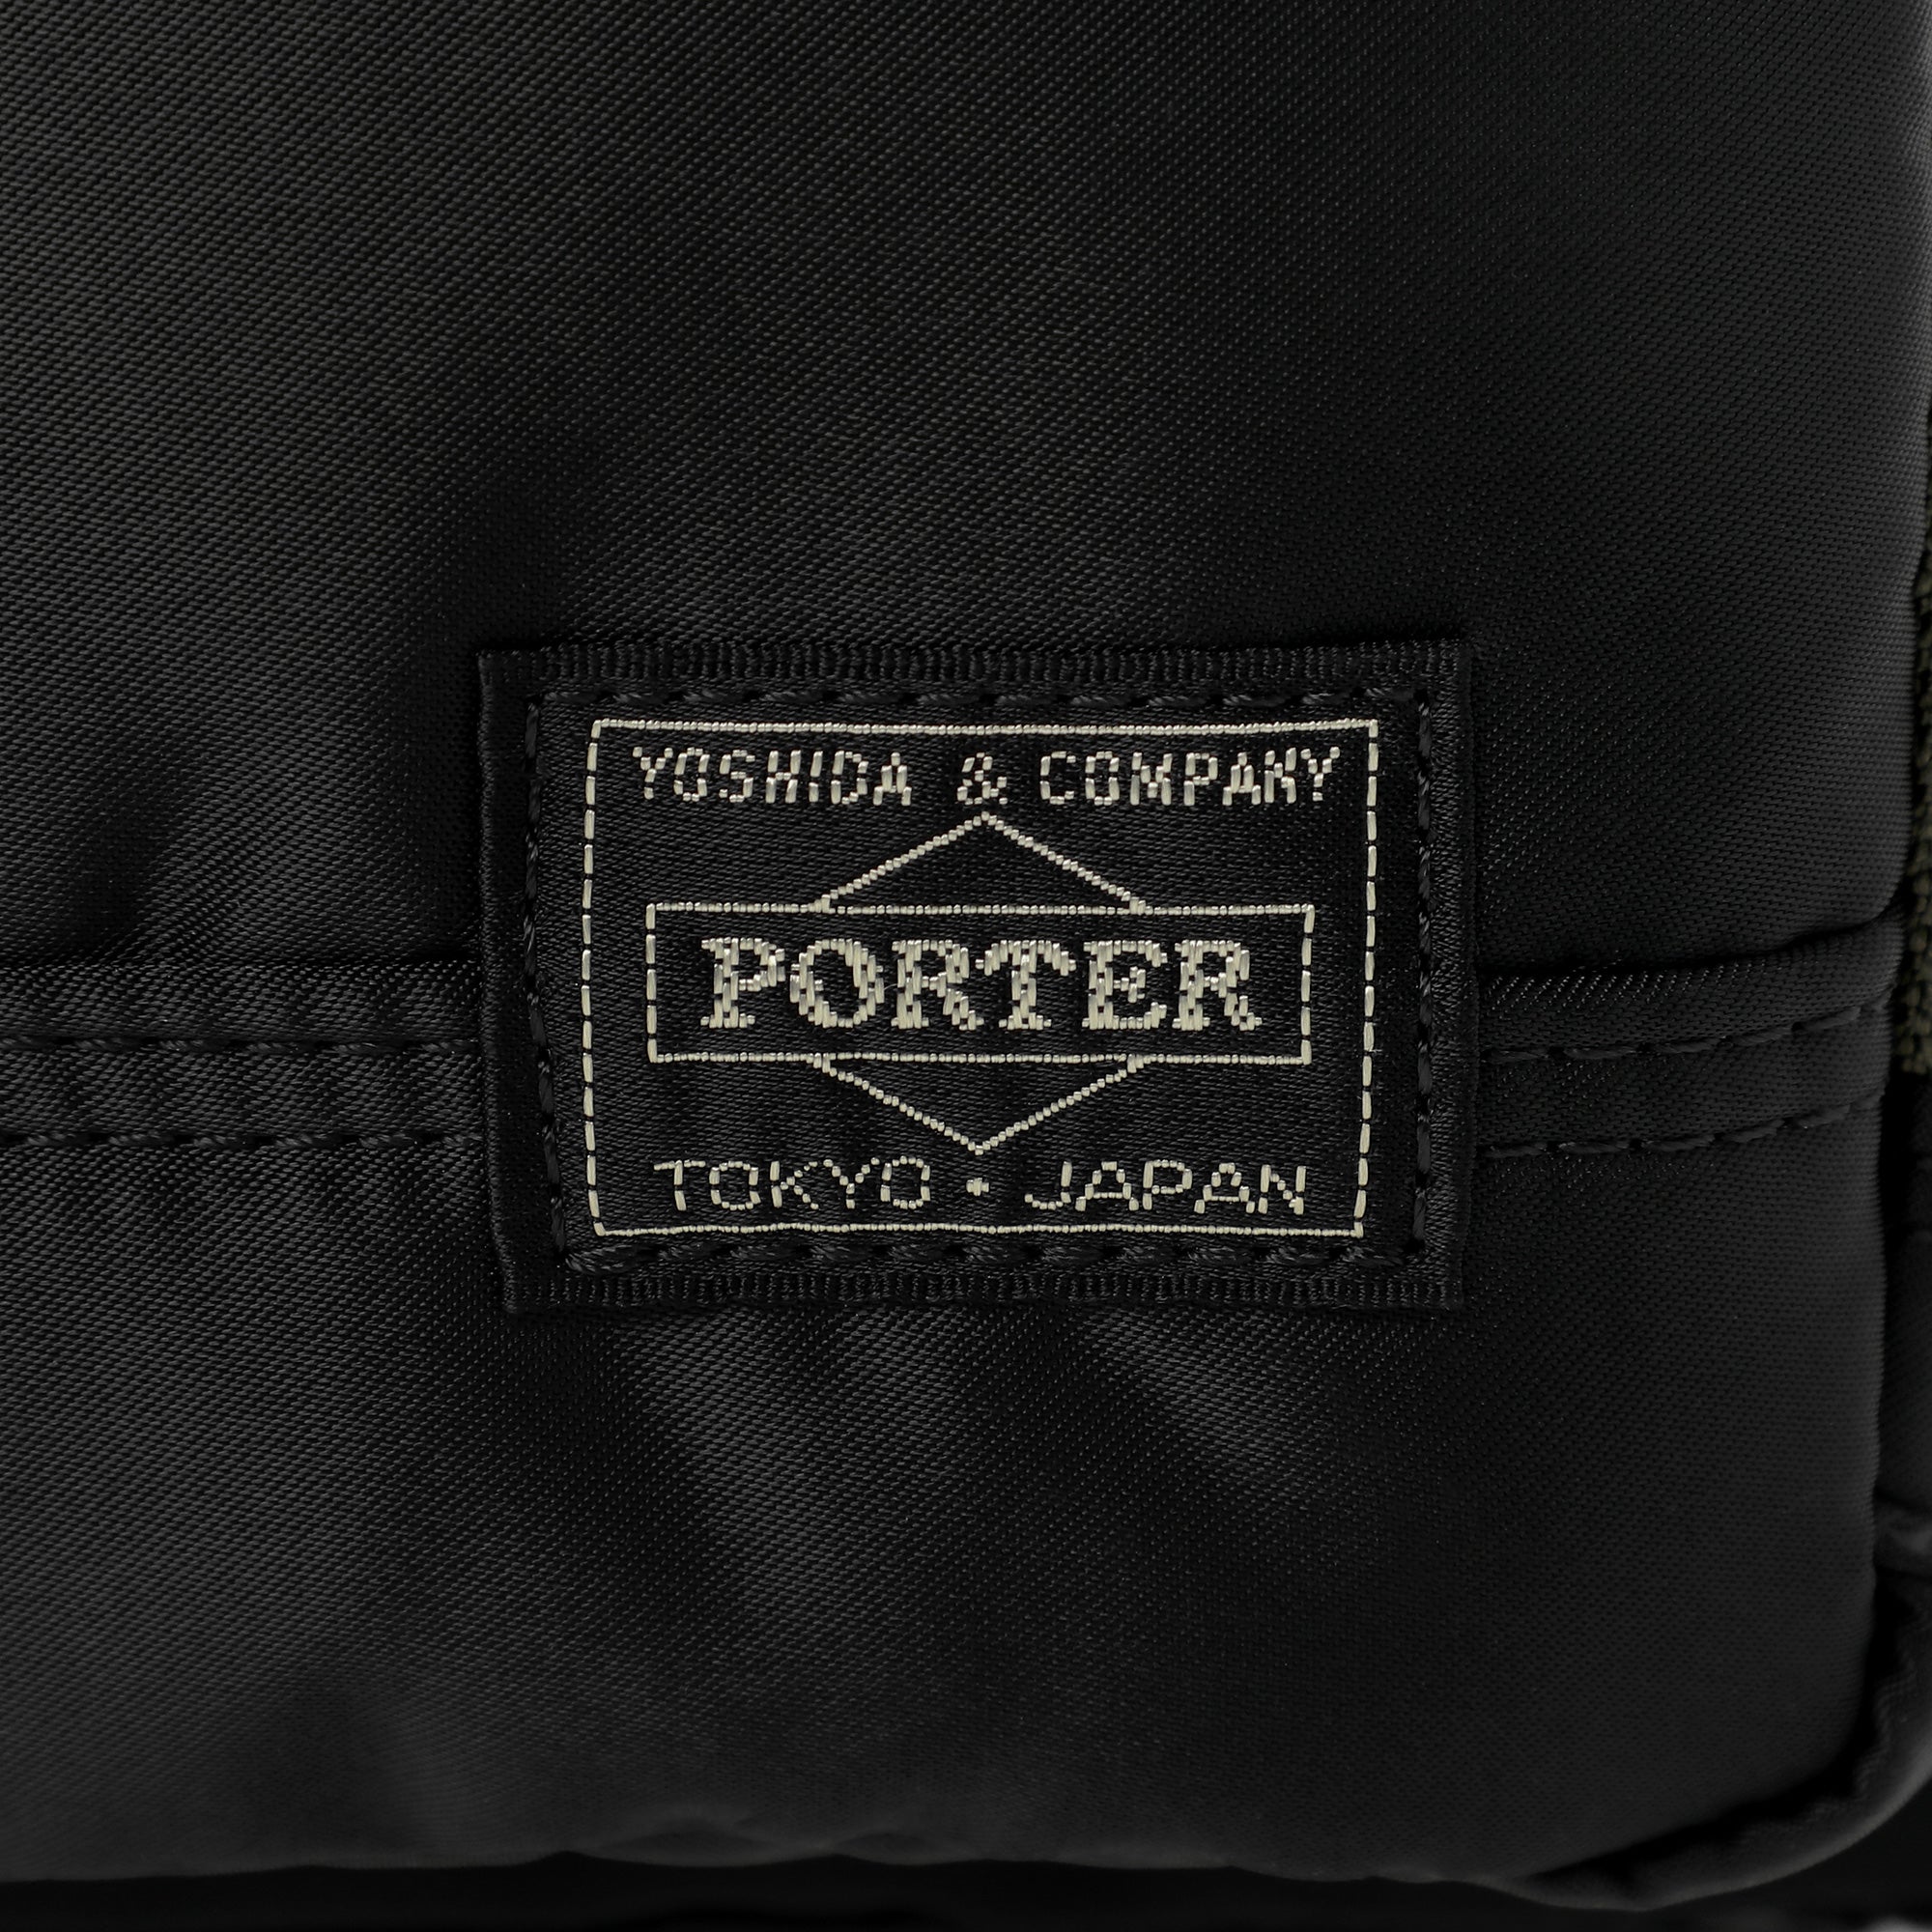 PORTER - PX TANKER Officer Bag - (Black) view 7